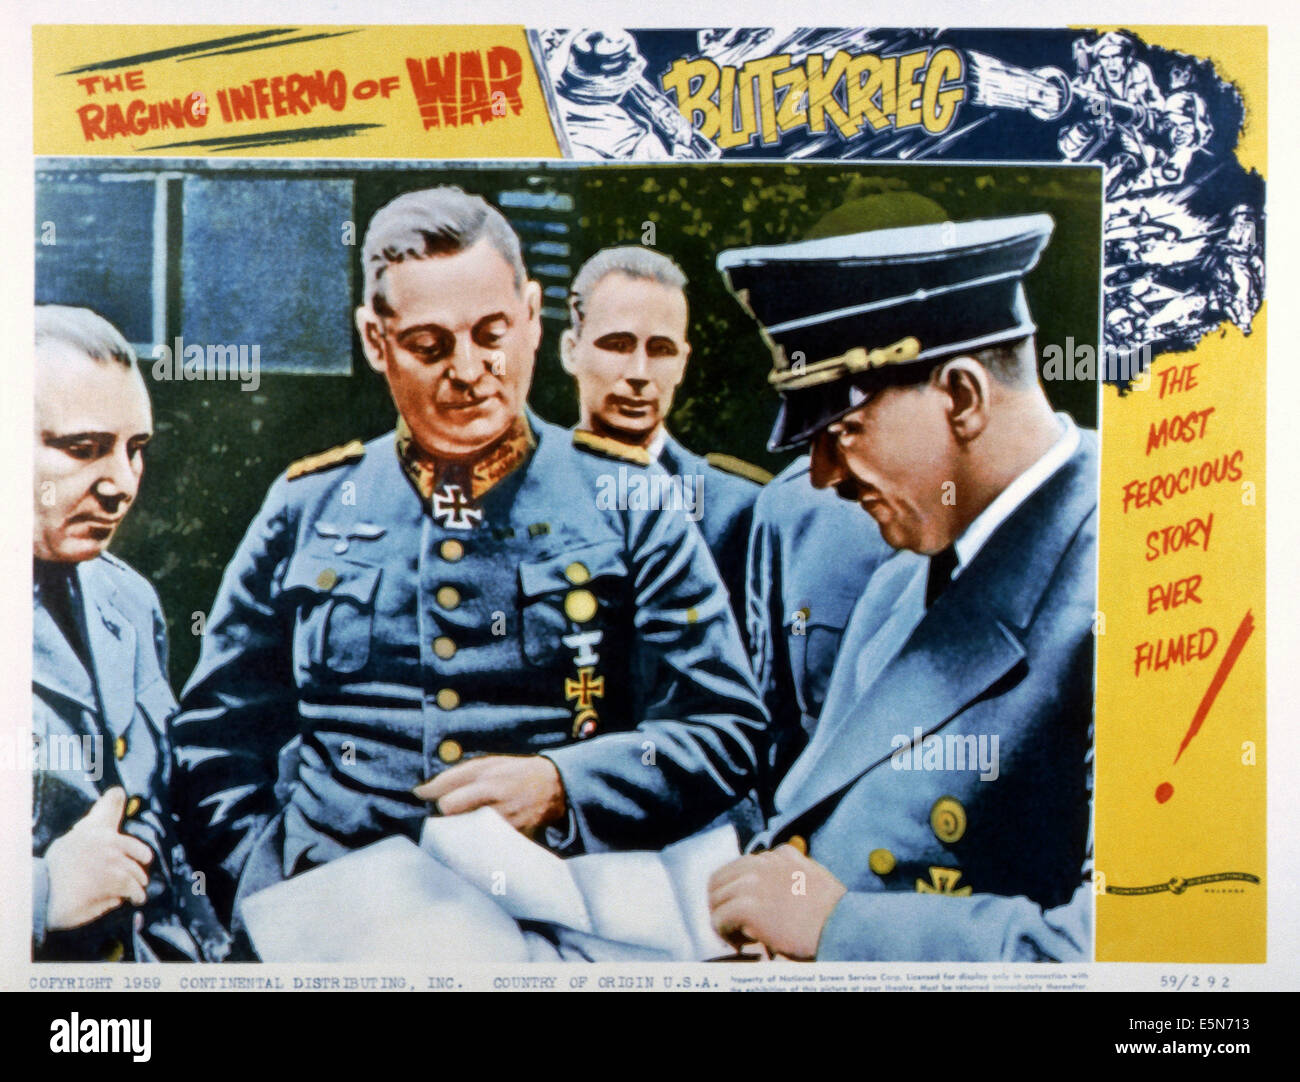 BLITZKRIEG, from left: Martin Bormann, Wilhelm Keitel, Rudolf Hess (back), Adolf Hitler, 1959 Stock Photo